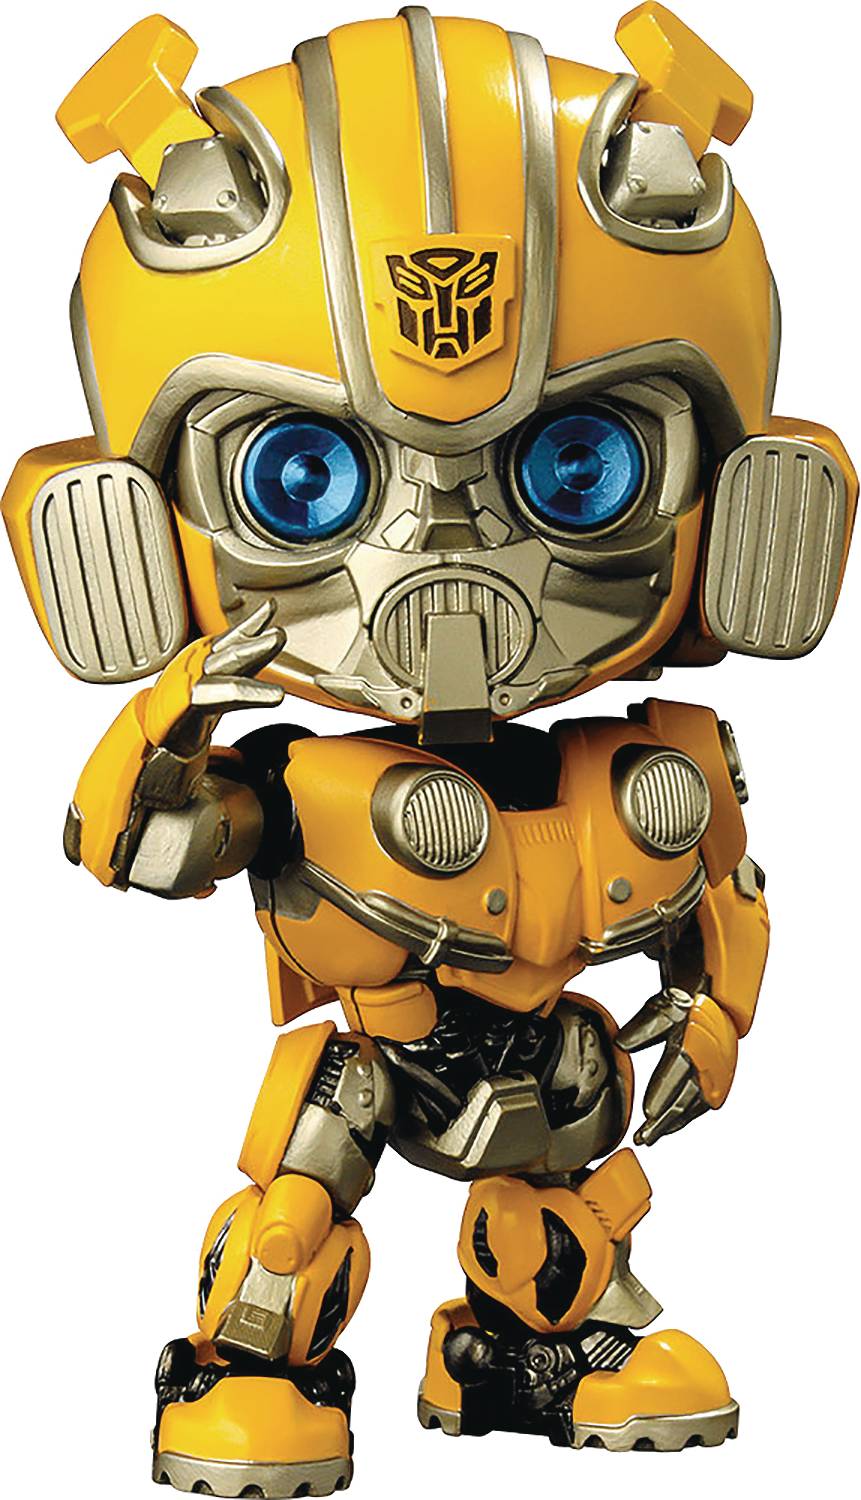 Transformers Bumblebee Nendoroid Action Figure